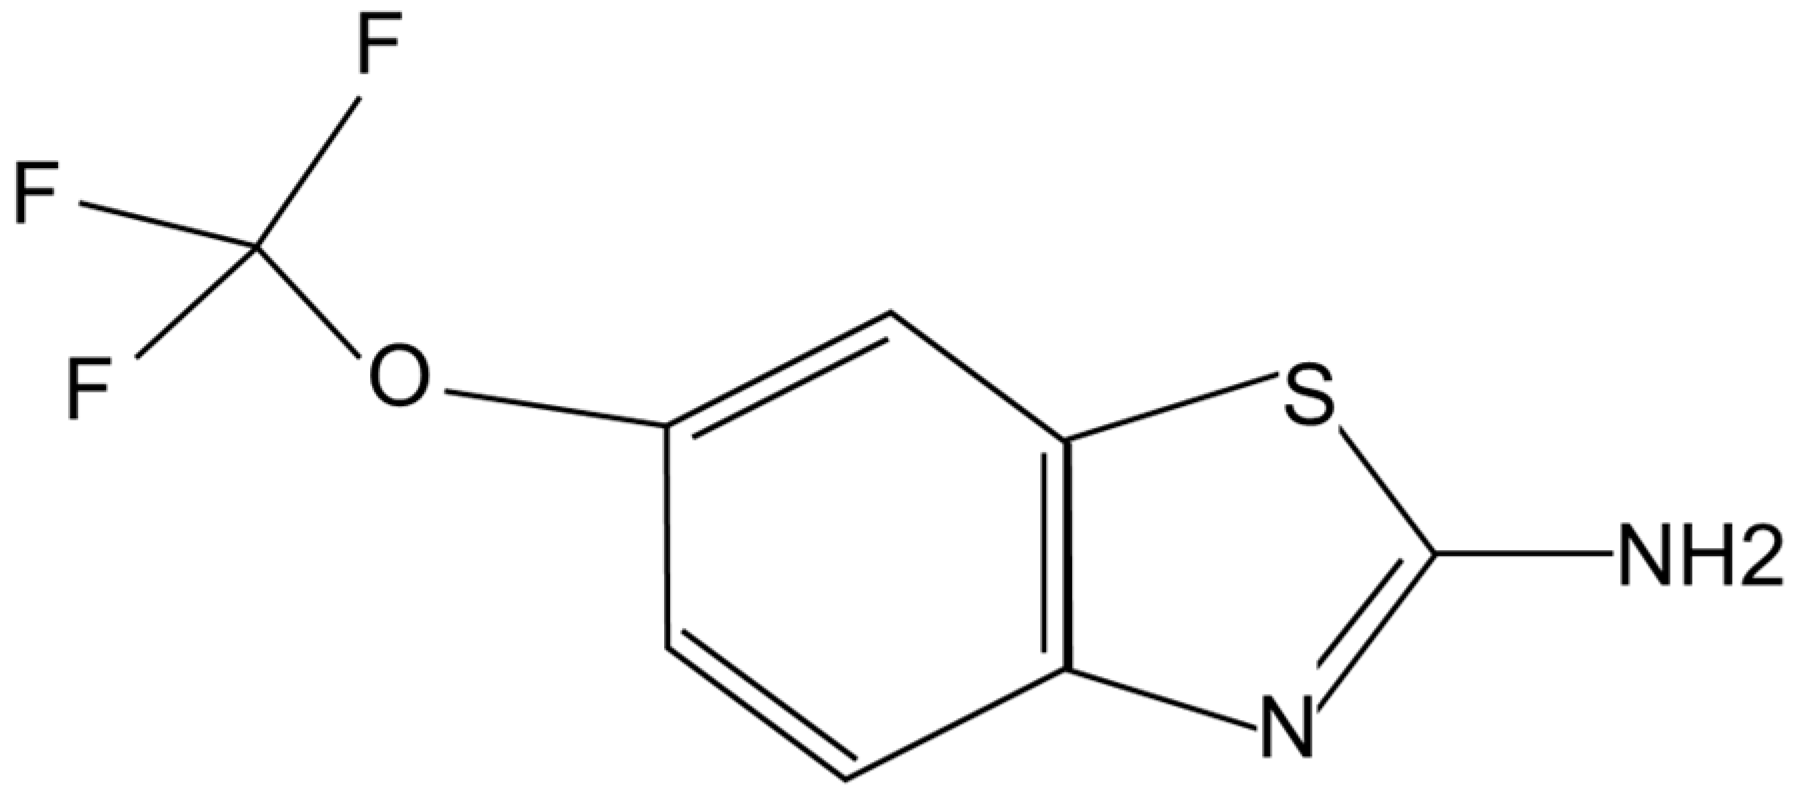 Molecules 20 07775 g001